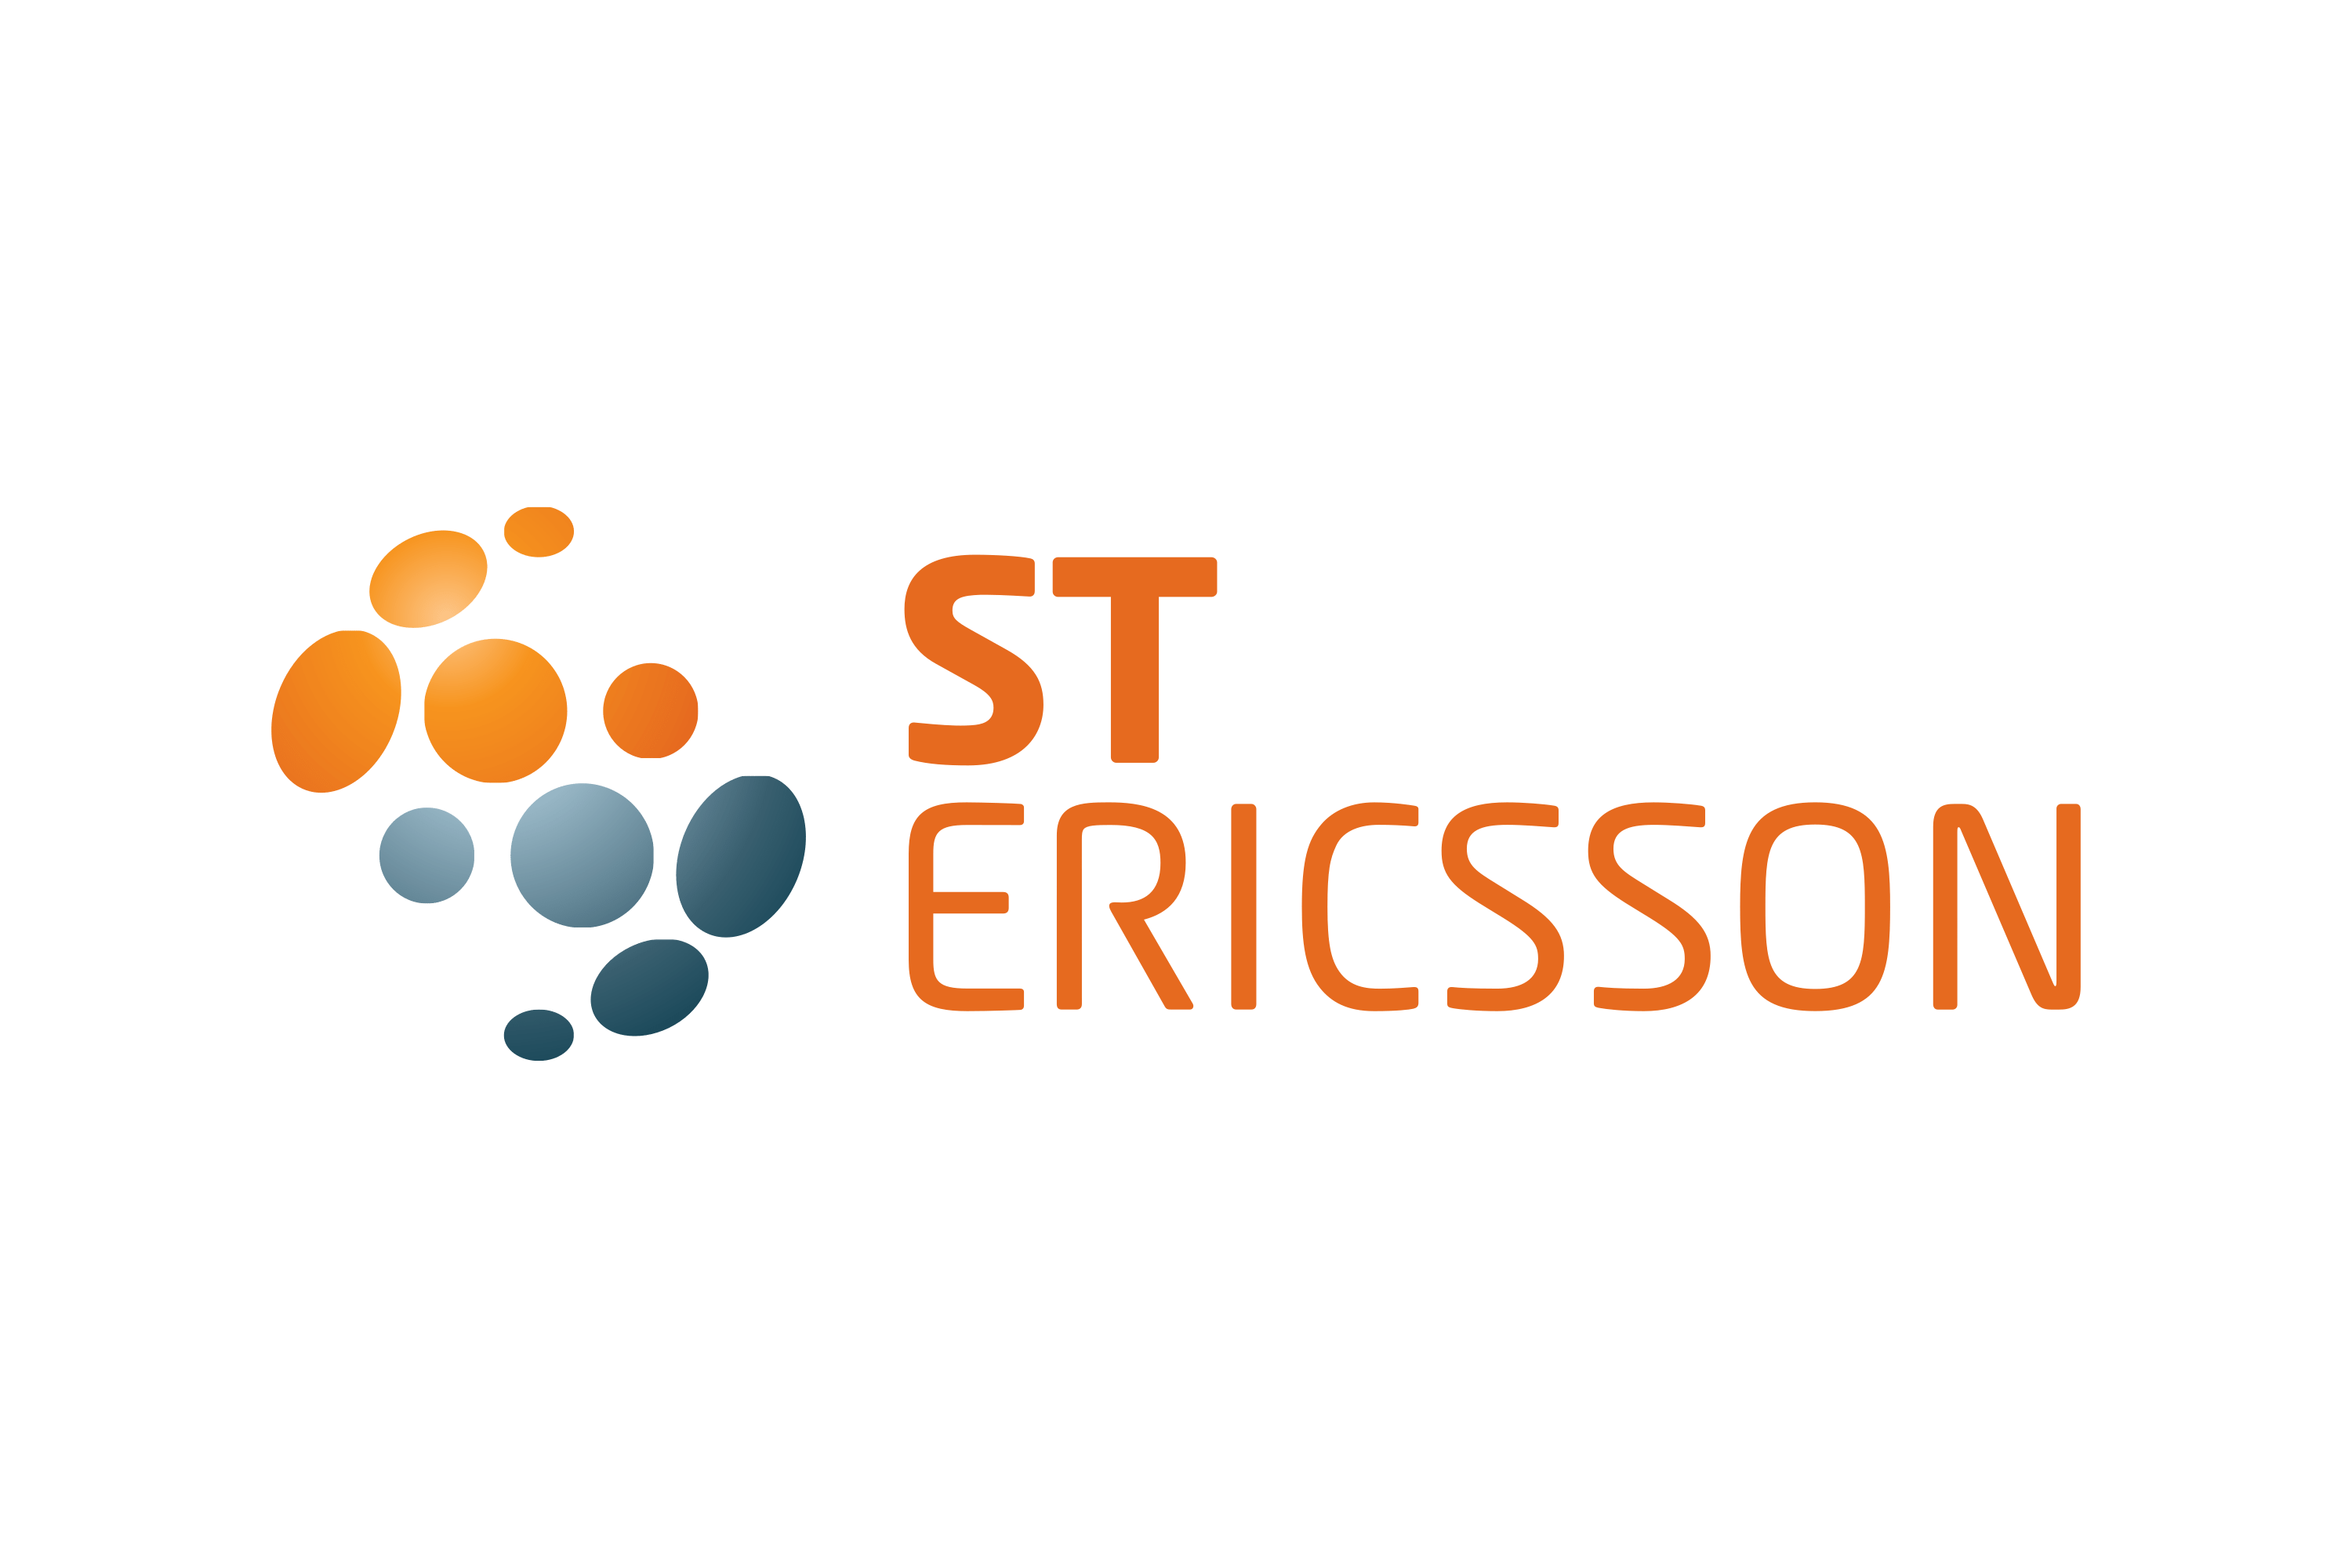 Download ST-Ericsson Logo in SVG Vector or PNG File Format ...